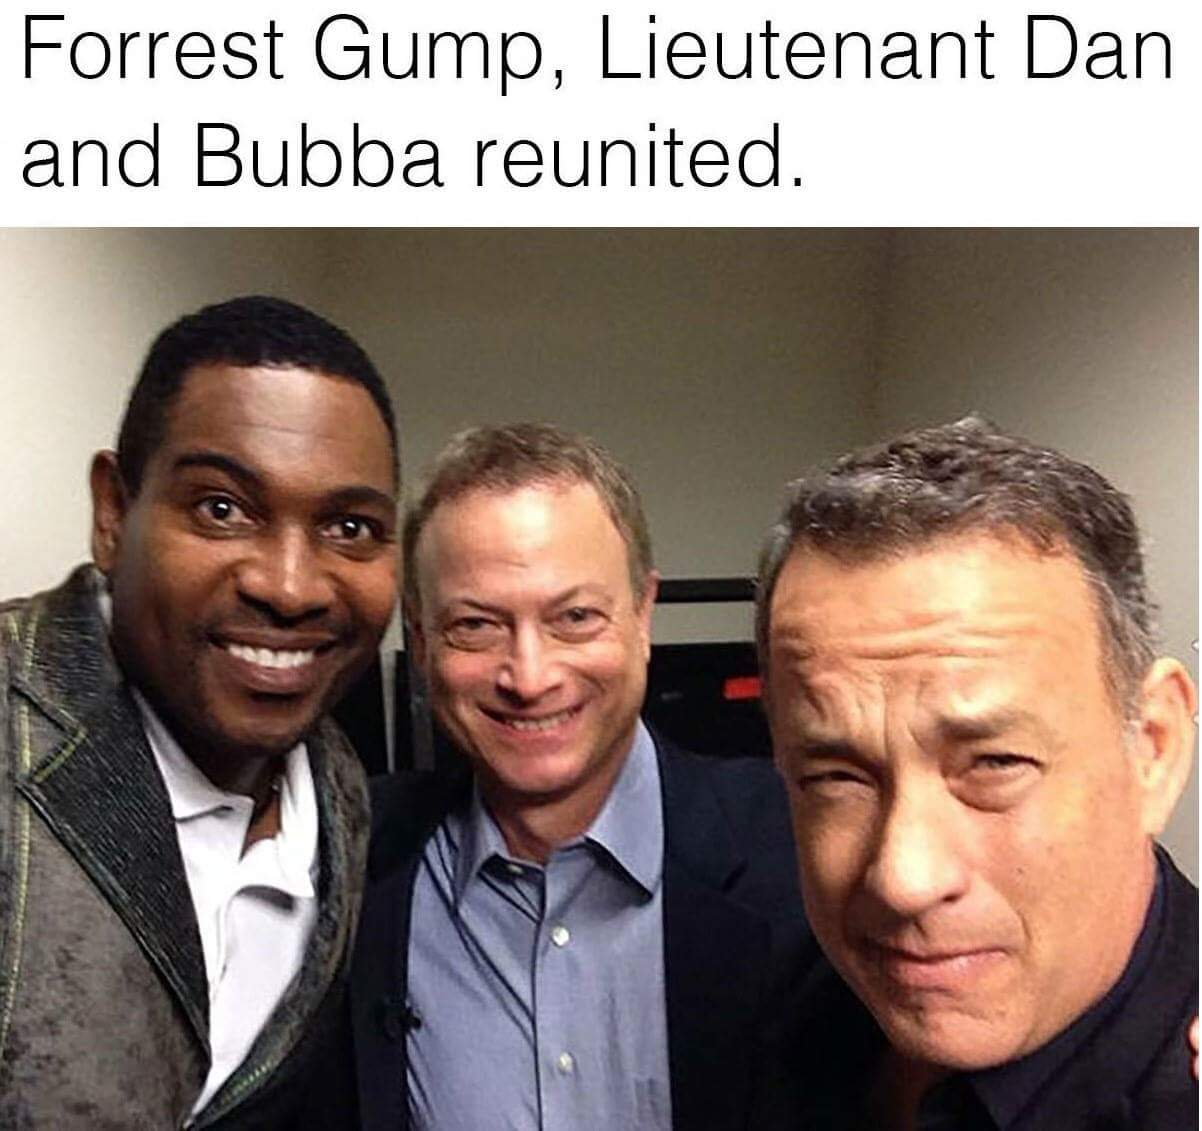 memes - forrest gump reunion - Forrest Gump, Lieutenant Dan and Bubba reunited.